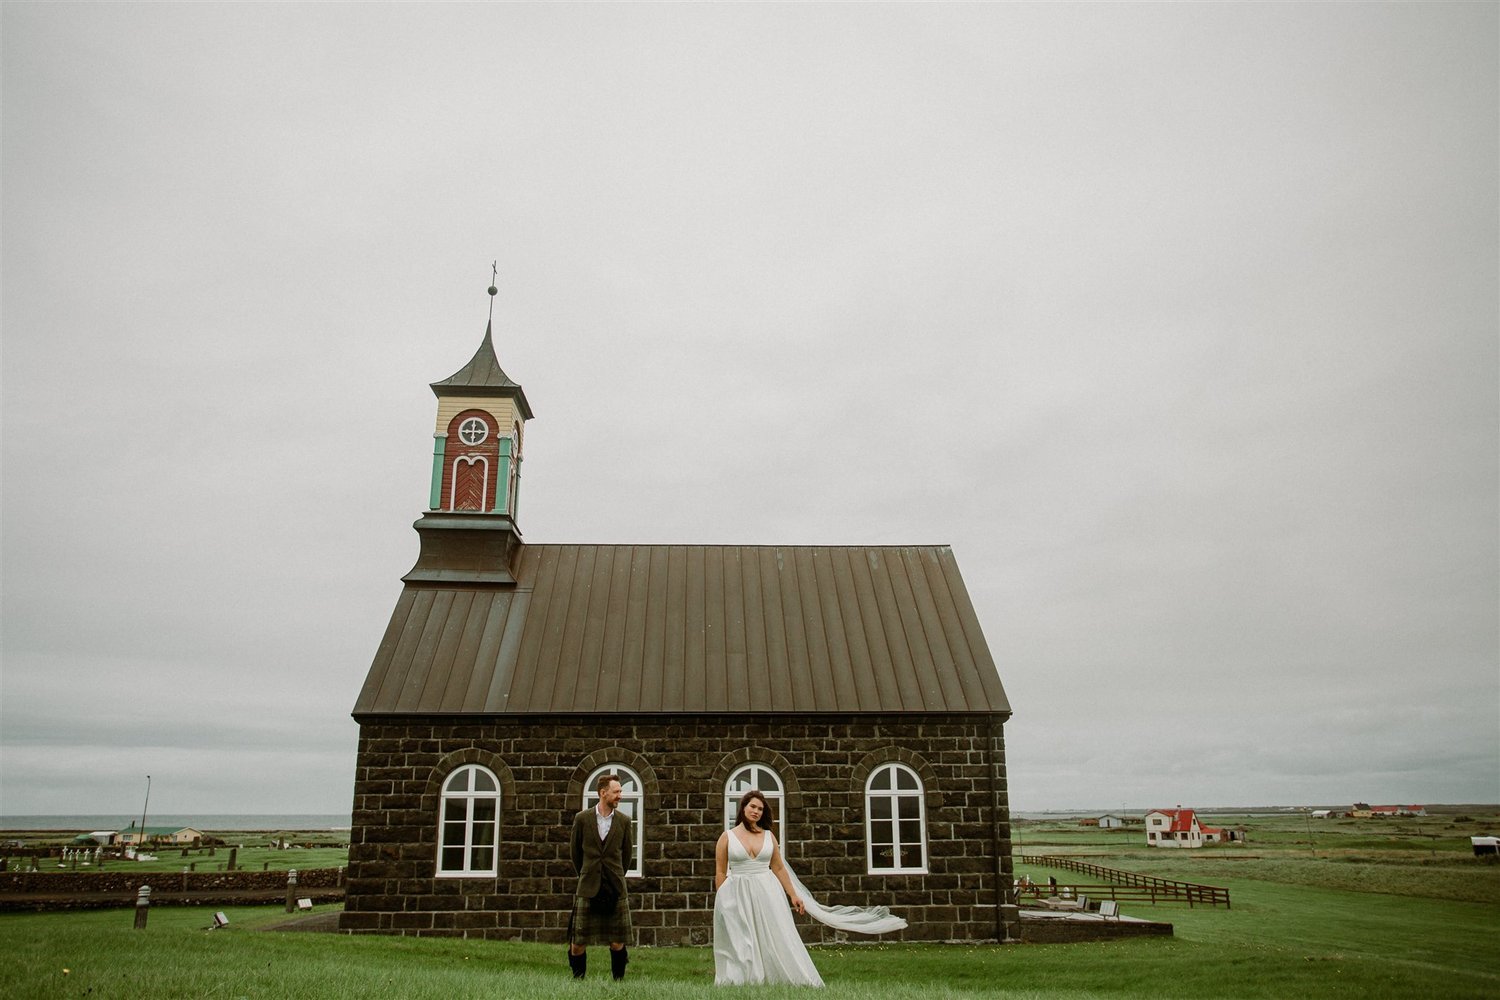 Iceland church portrait pictures.jpg